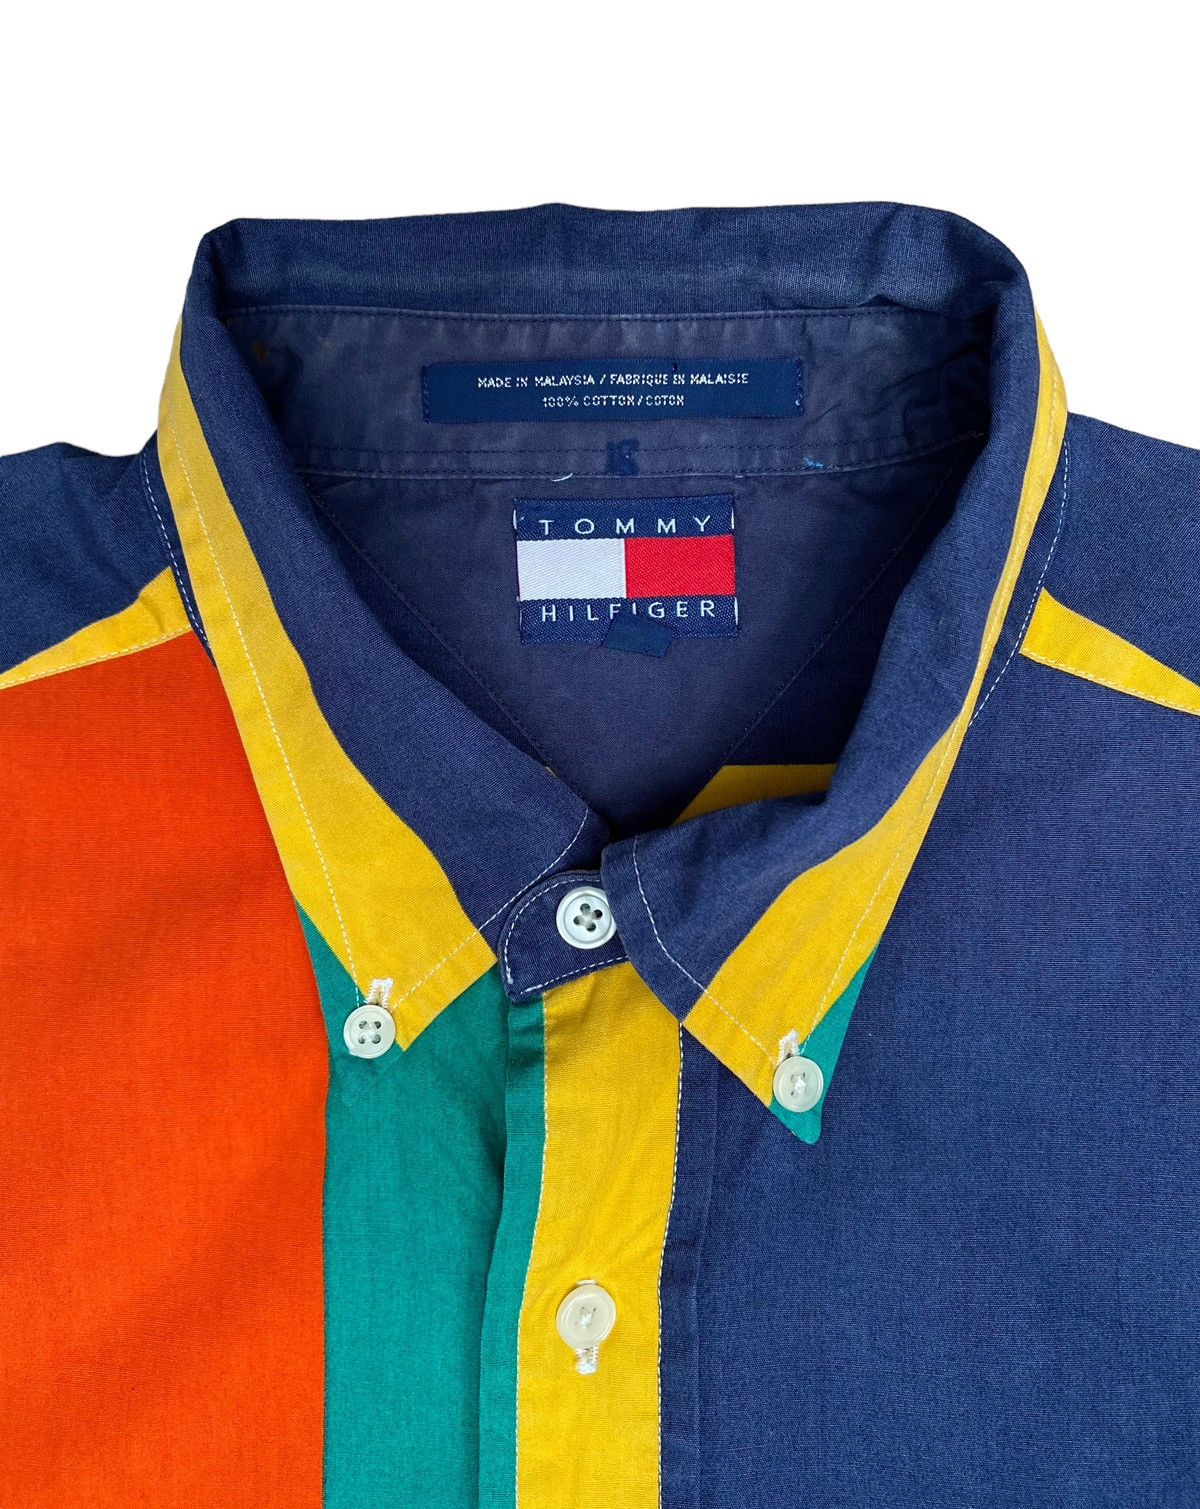 Vintage Rare Design Vintage Brand Tommy Hilfiger Stripe Shirt 1990s Size US L / EU 52-54 / 3 - 6 Preview